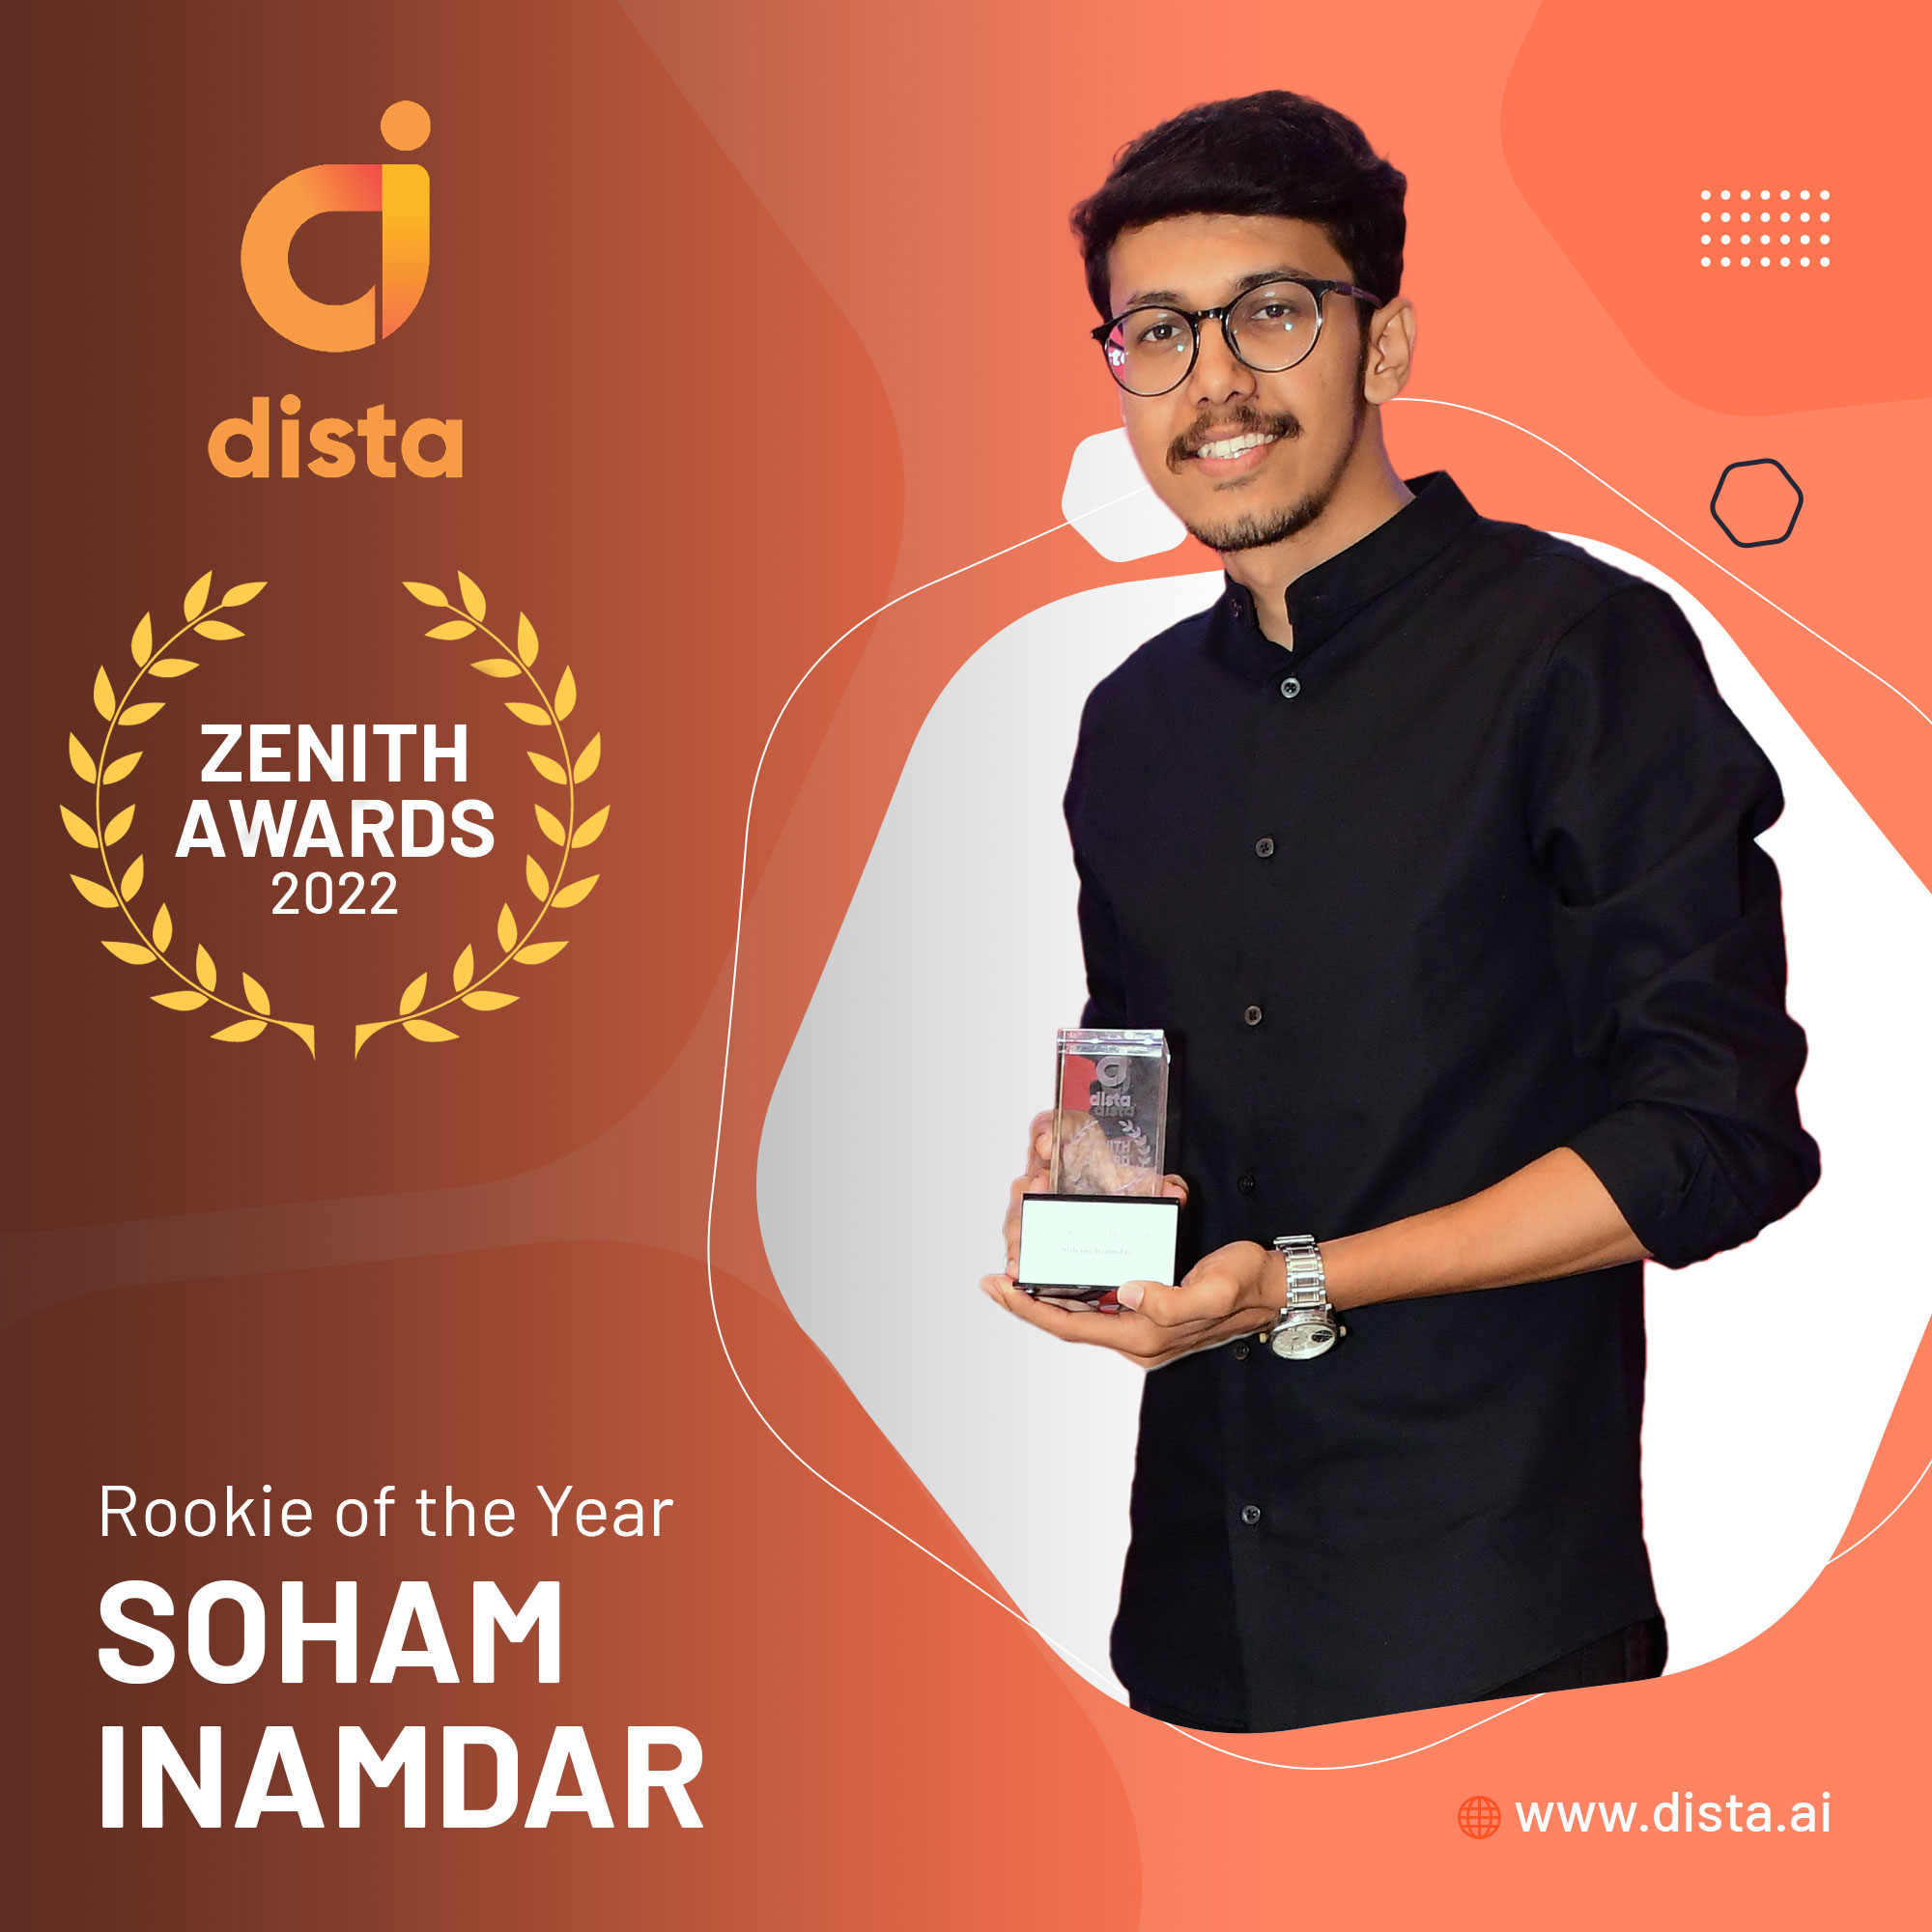 Soham Inamdar - Dista Zenith Awards 2022